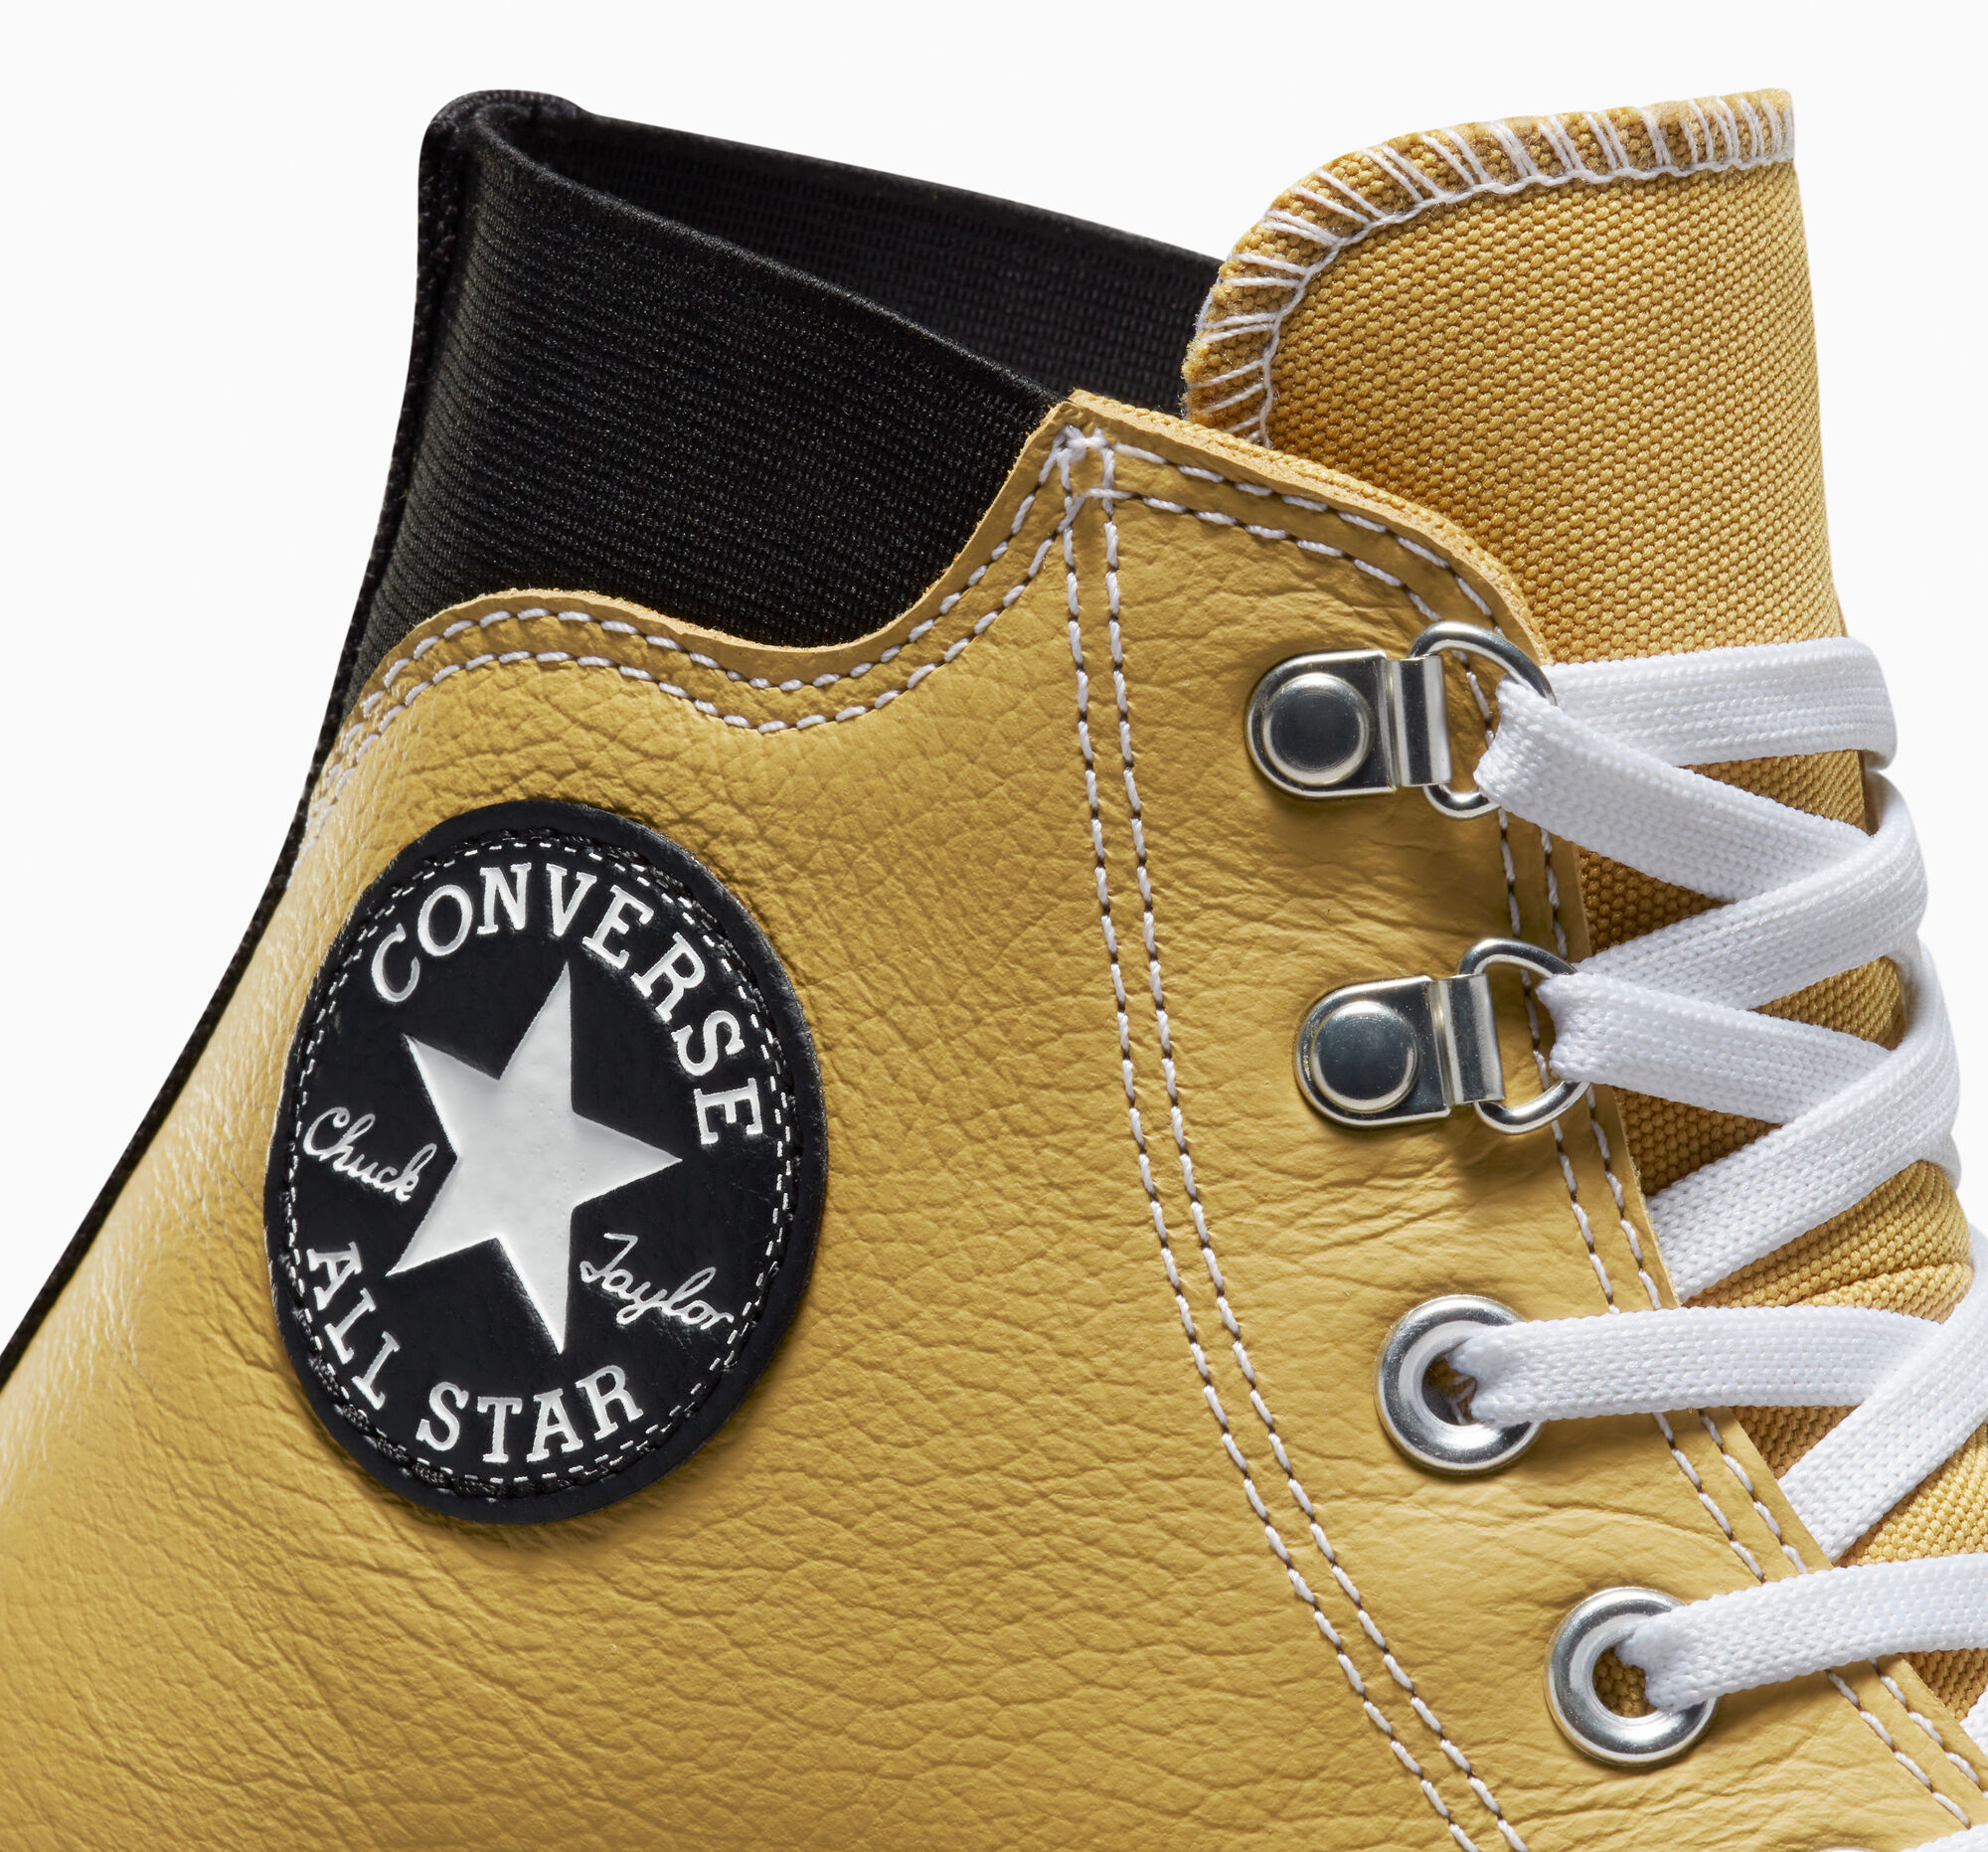 Converse Chuck Taylor All Star City Trek Waterproof Boot High-Top Sneakers